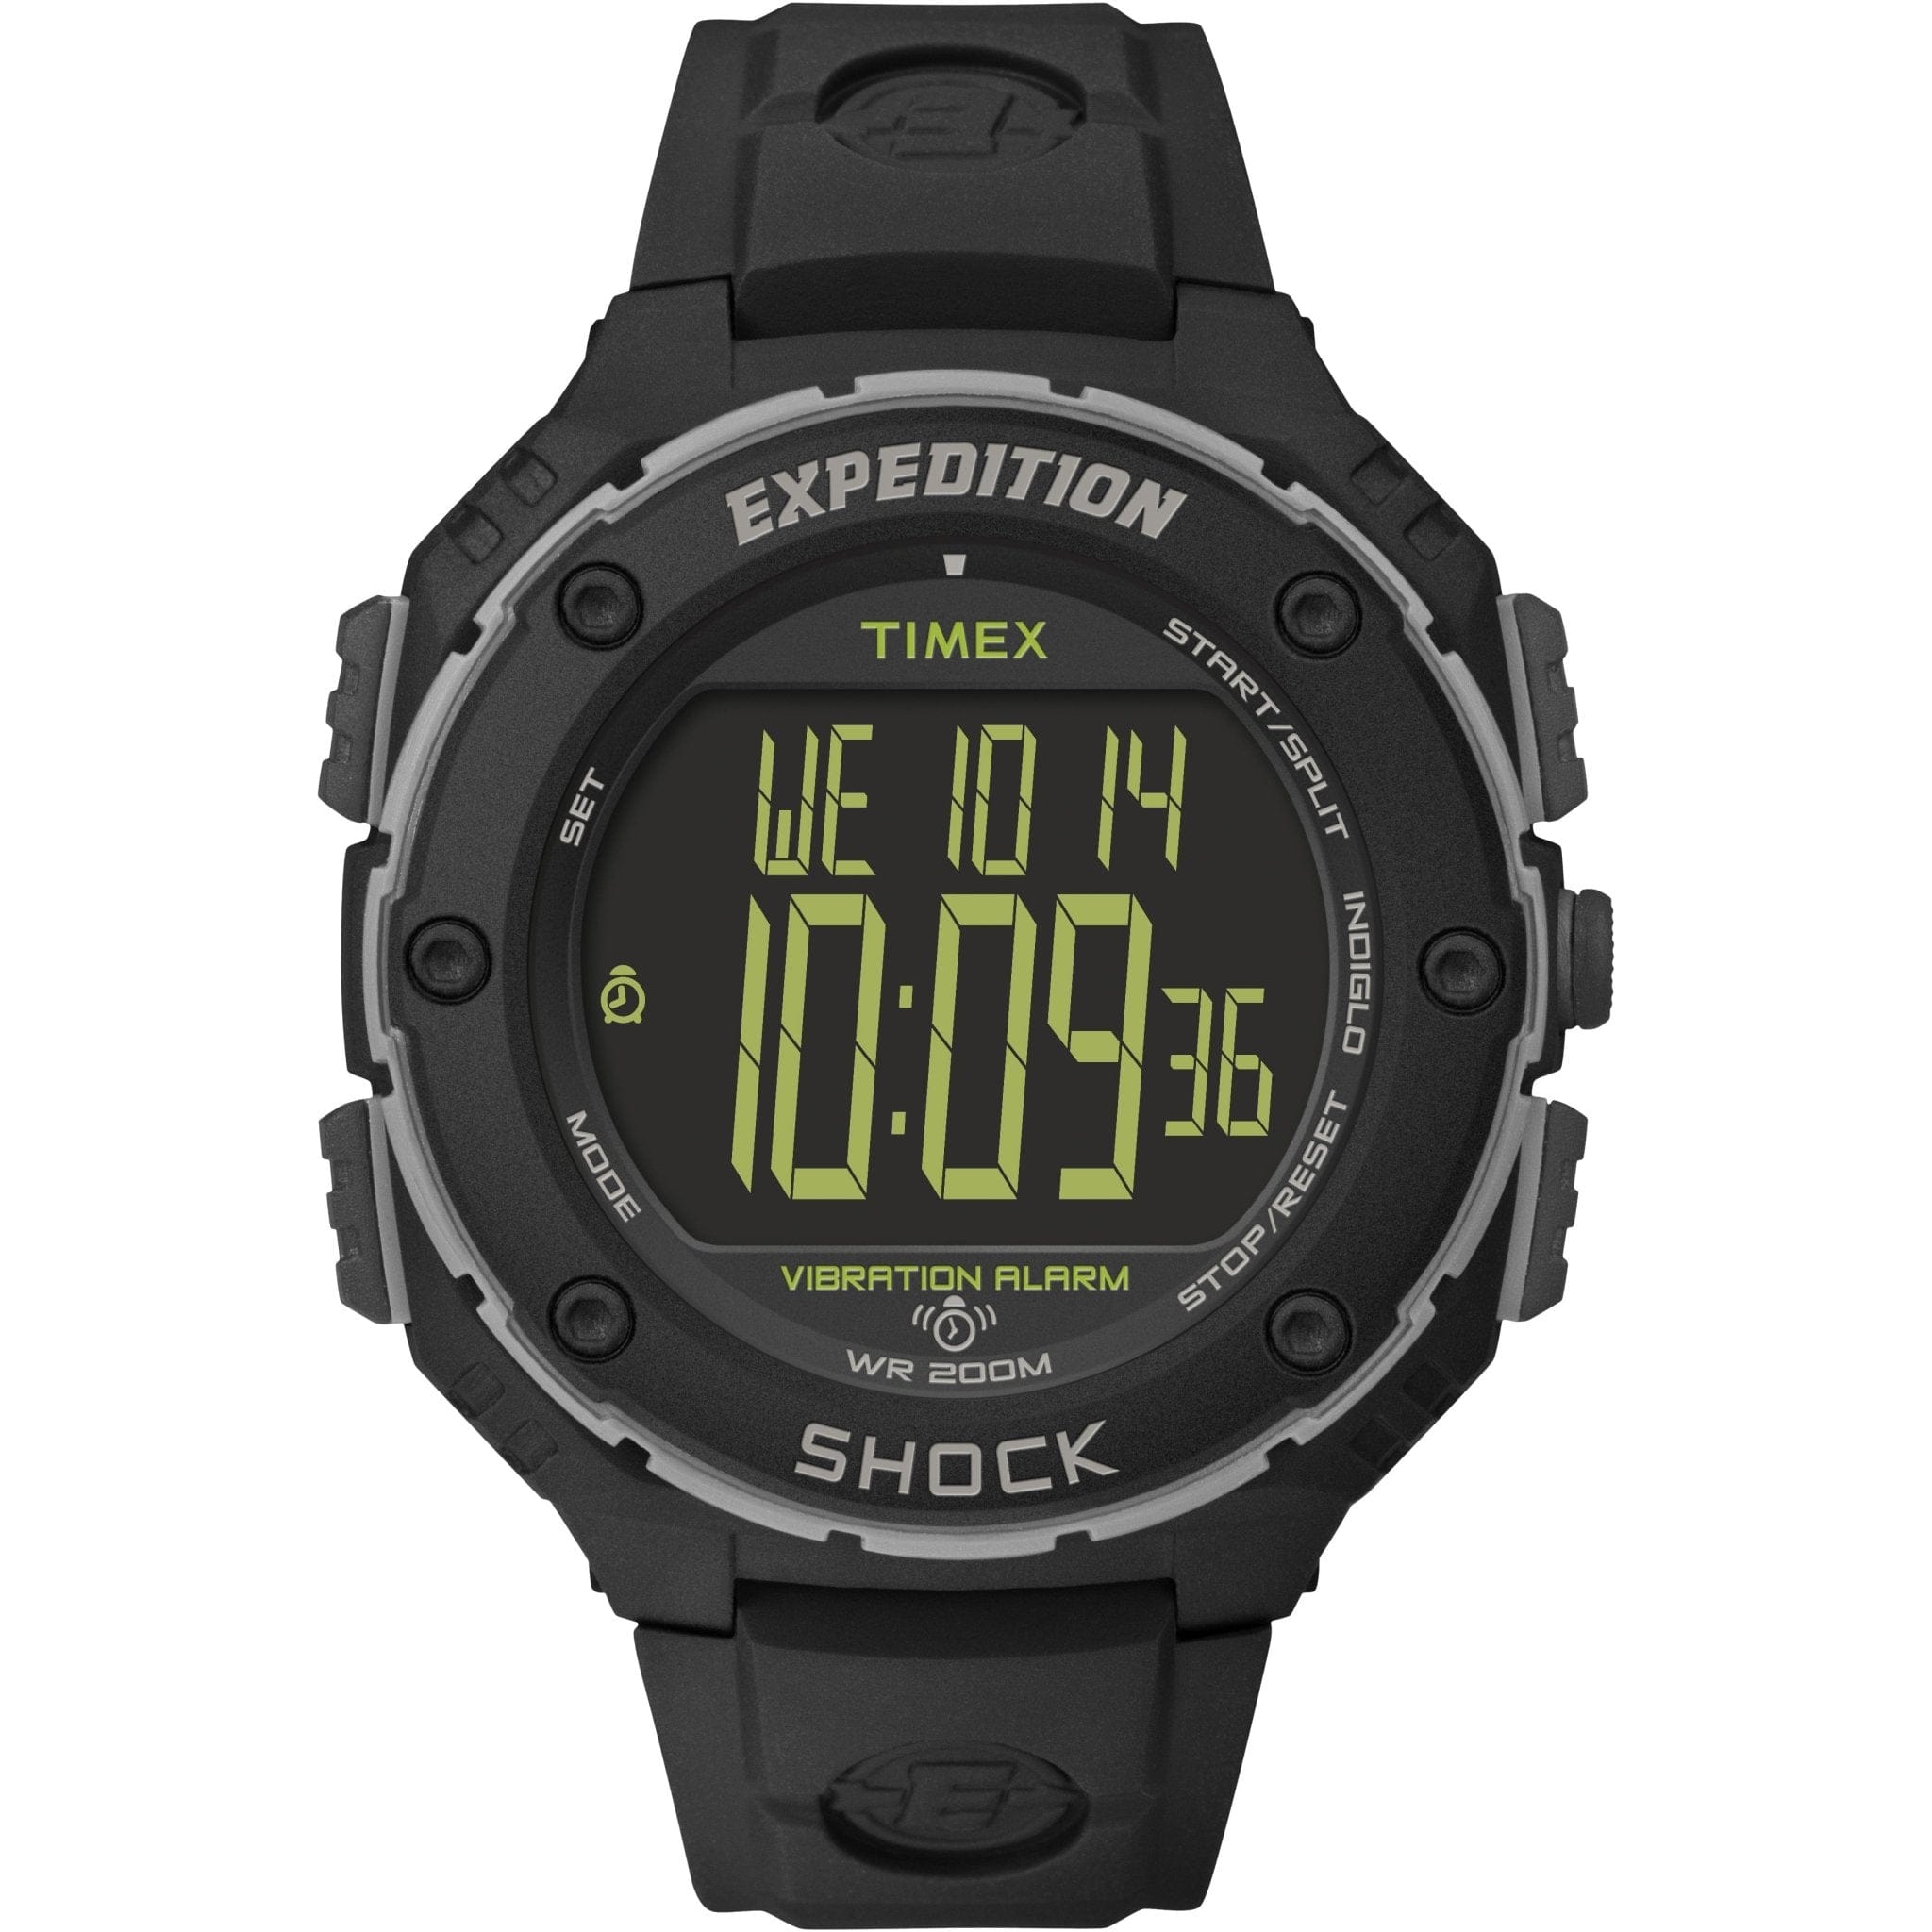 Timex Men's Expedition Shock XL Vibrating Alarm Resin Strap Watch T49950 - PilotMall.com